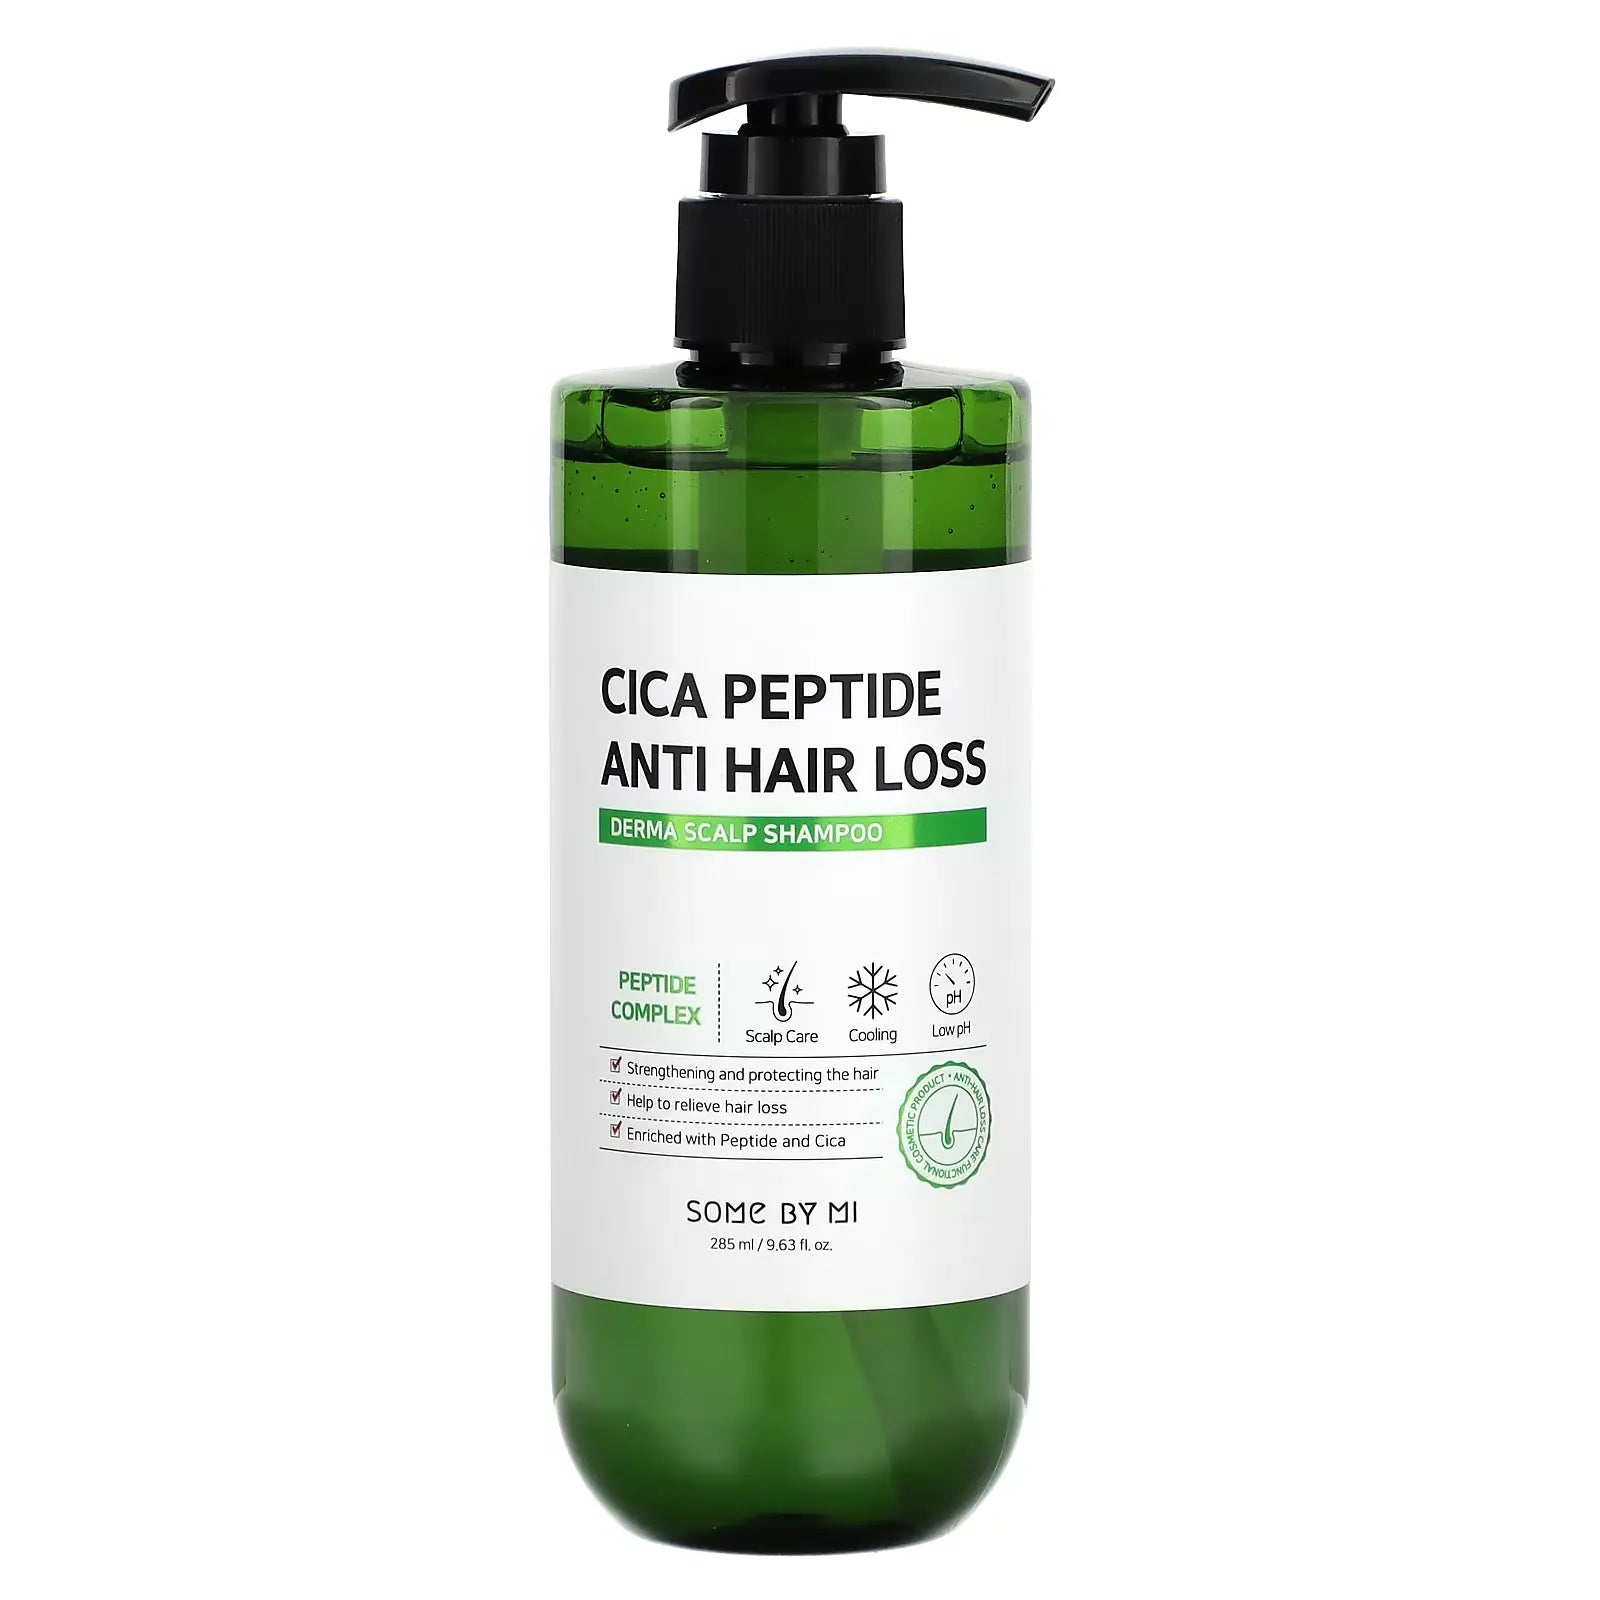 Some By Mi CICA Peptide Anti Hair Loss Derma Scalp Shampoo 285ml - Some by Mi | Kiokii and...